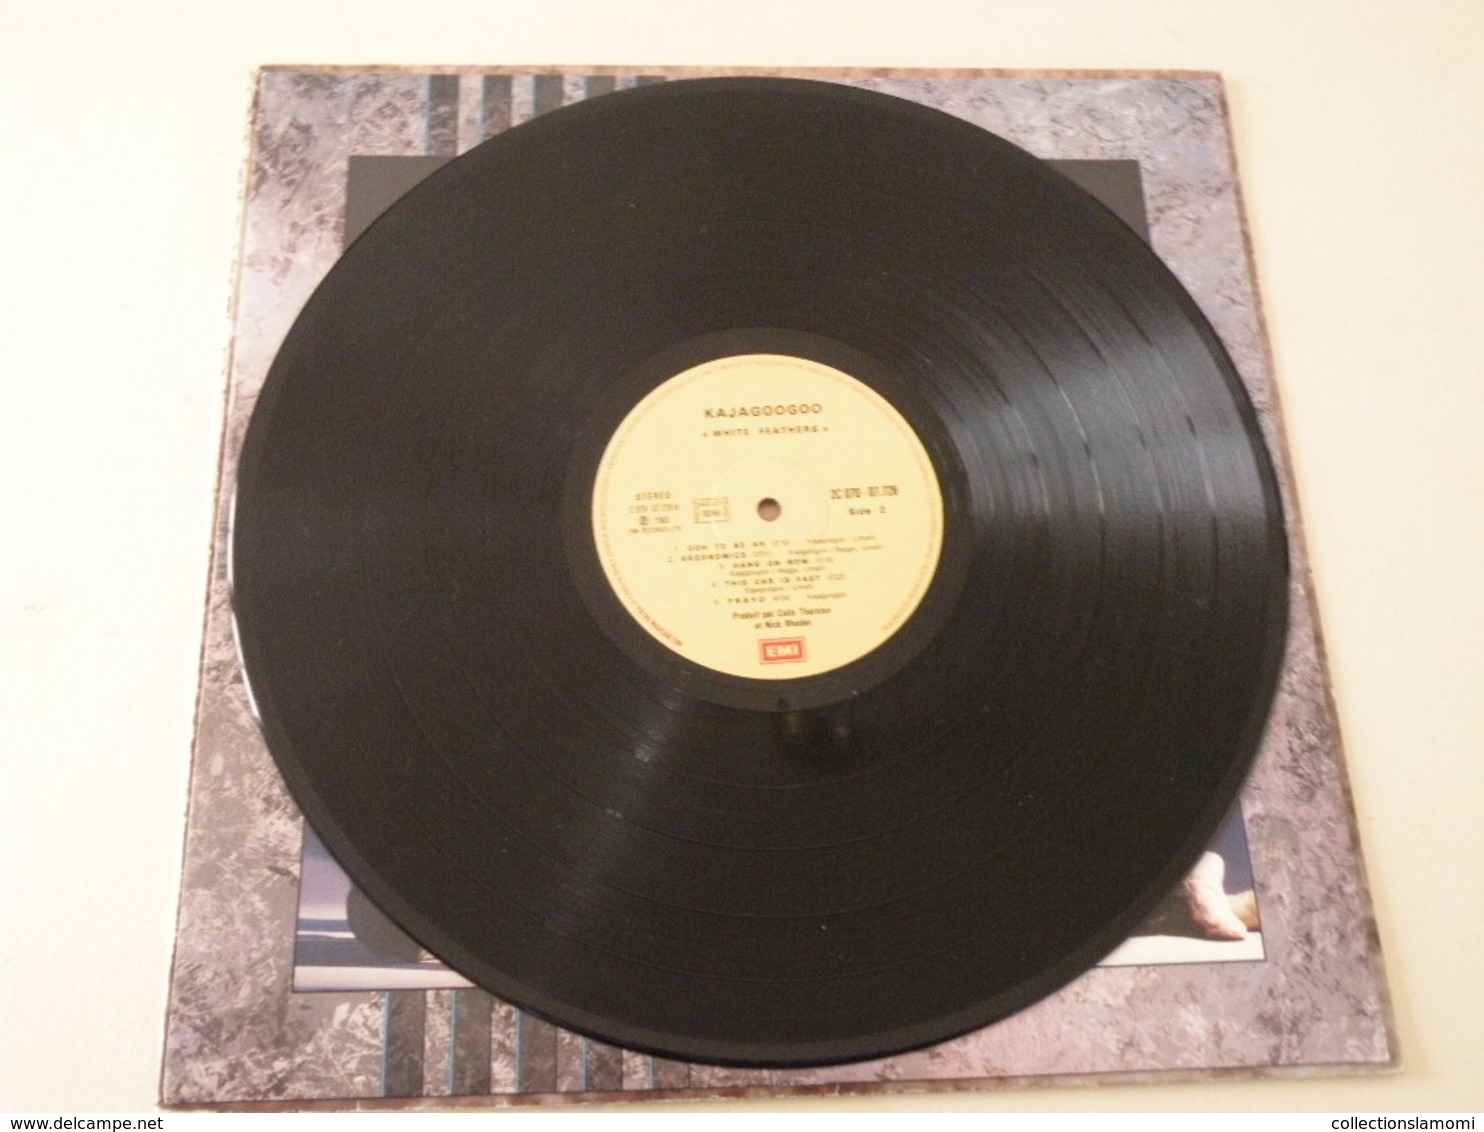 Kajagoogoo 1983 - (Titres Sur Photos) - Vinyle 33 T LP - Other - English Music